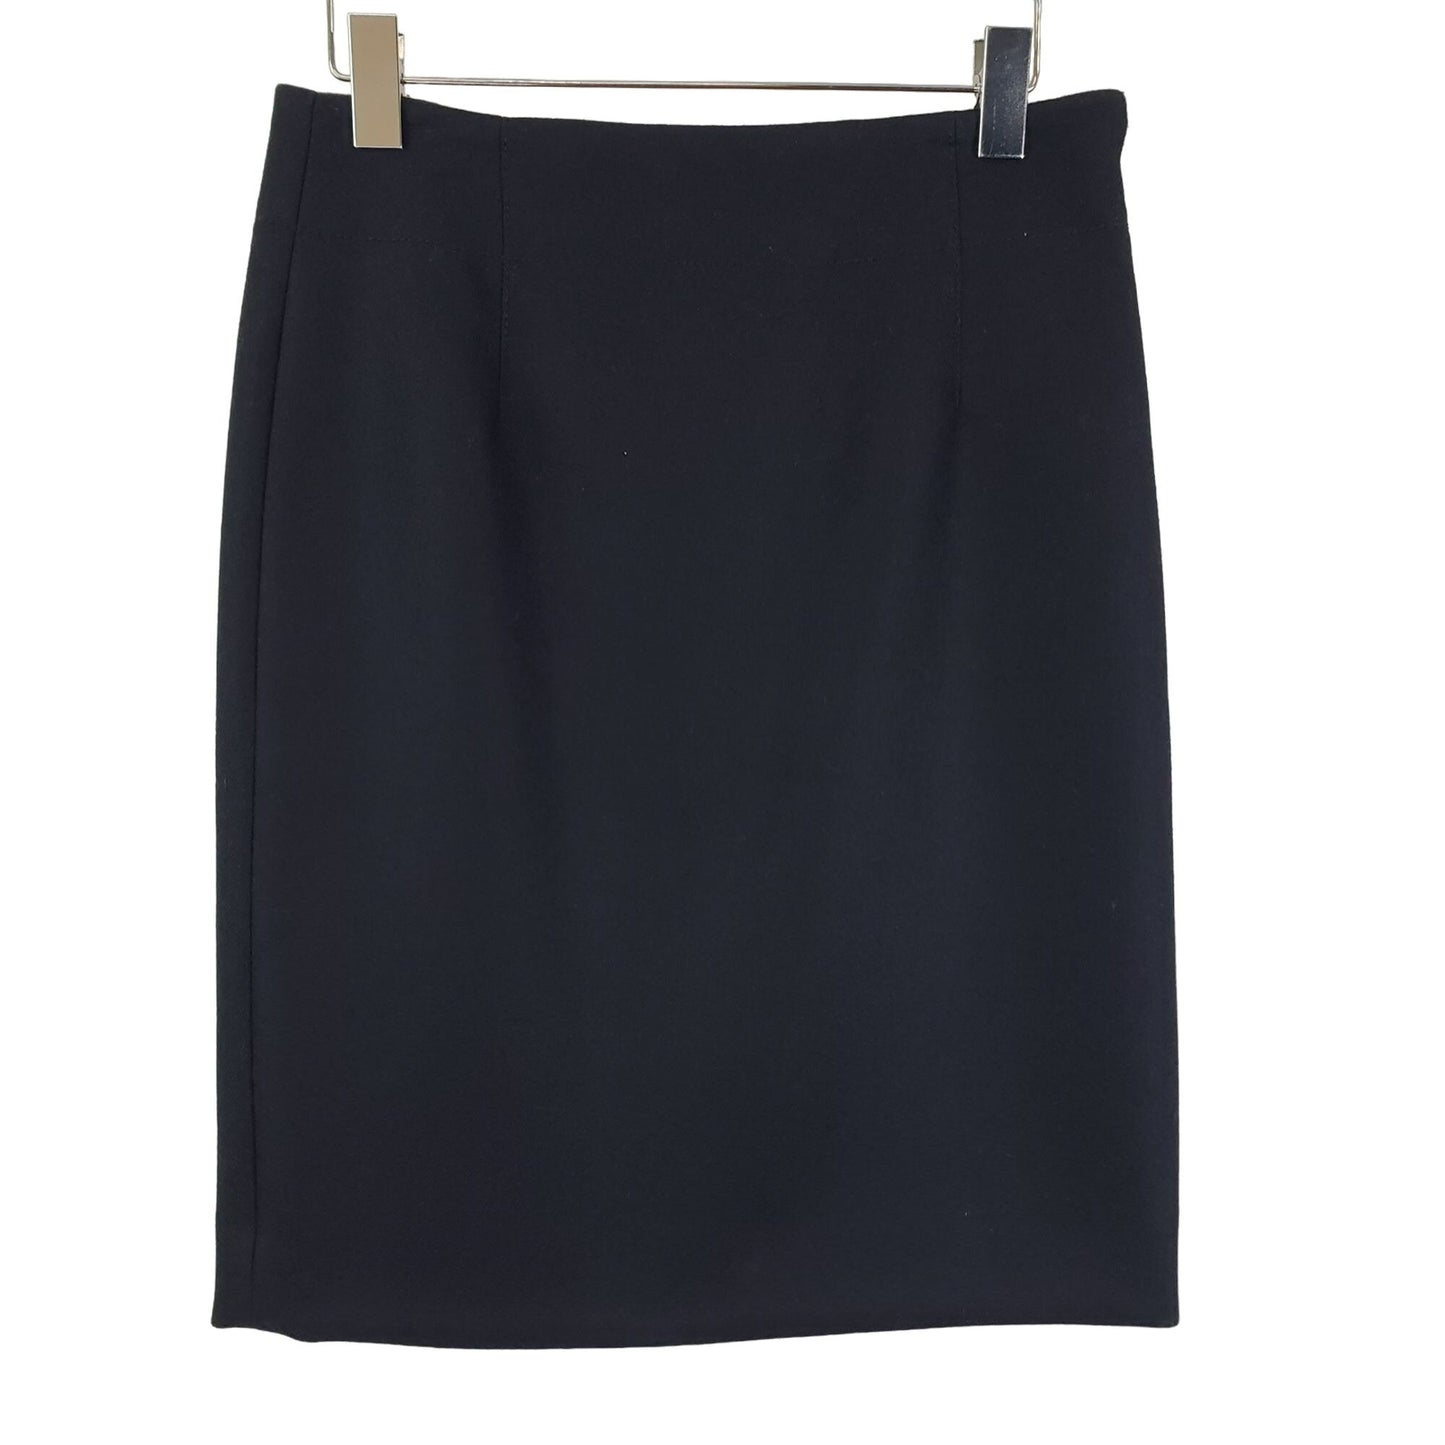 J. Crew 100% Wool Perfect Pencil Skirt Size 2